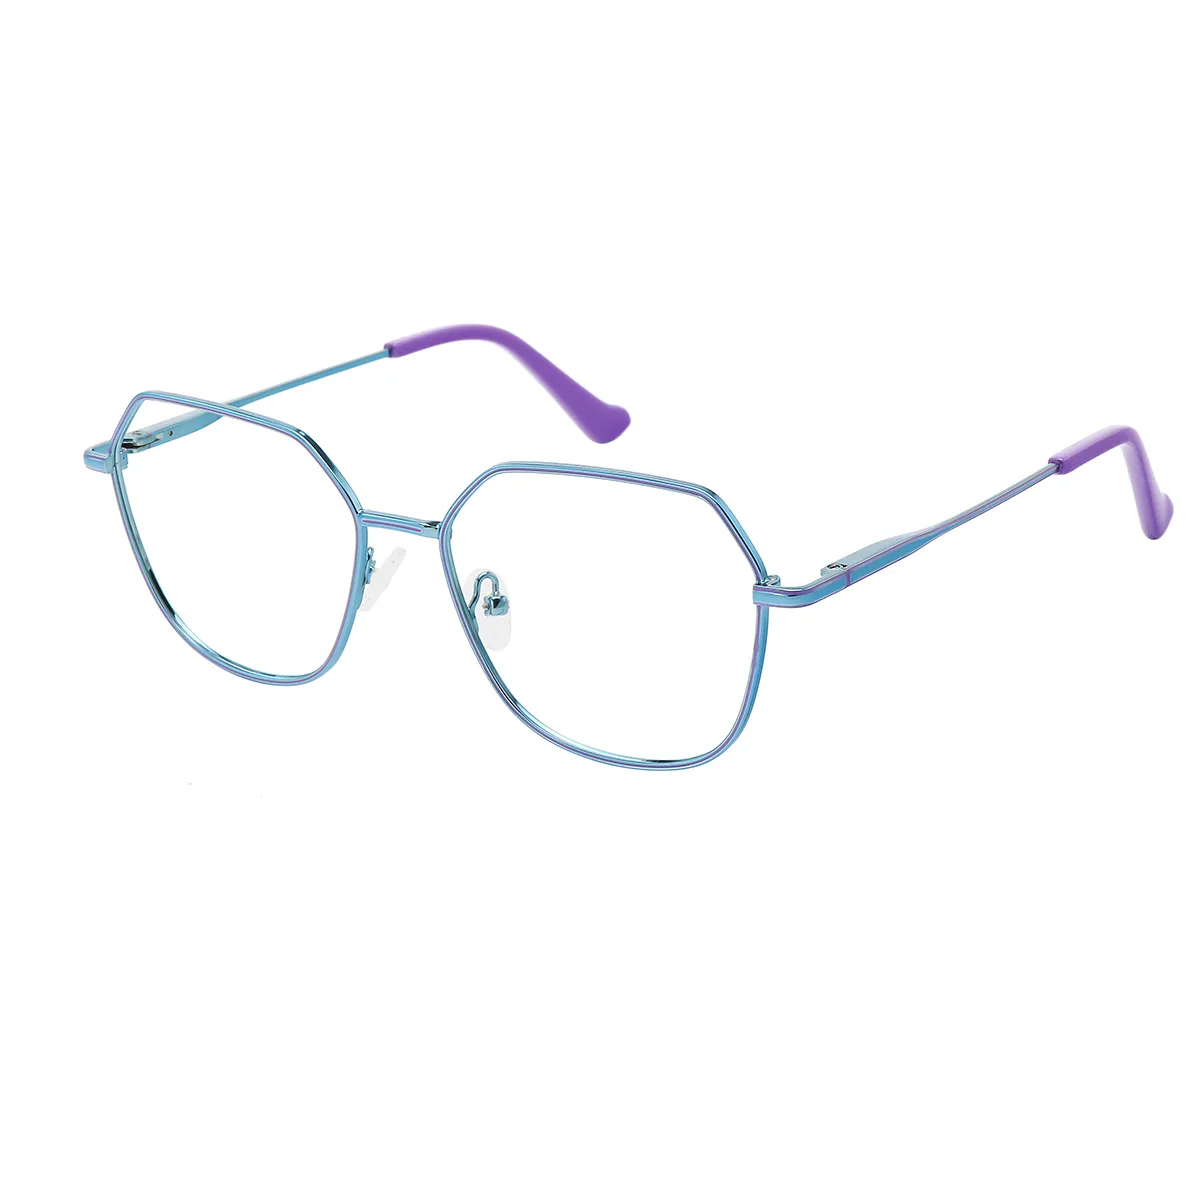 Chai - Geometric Blue/Purple Glasses for Women